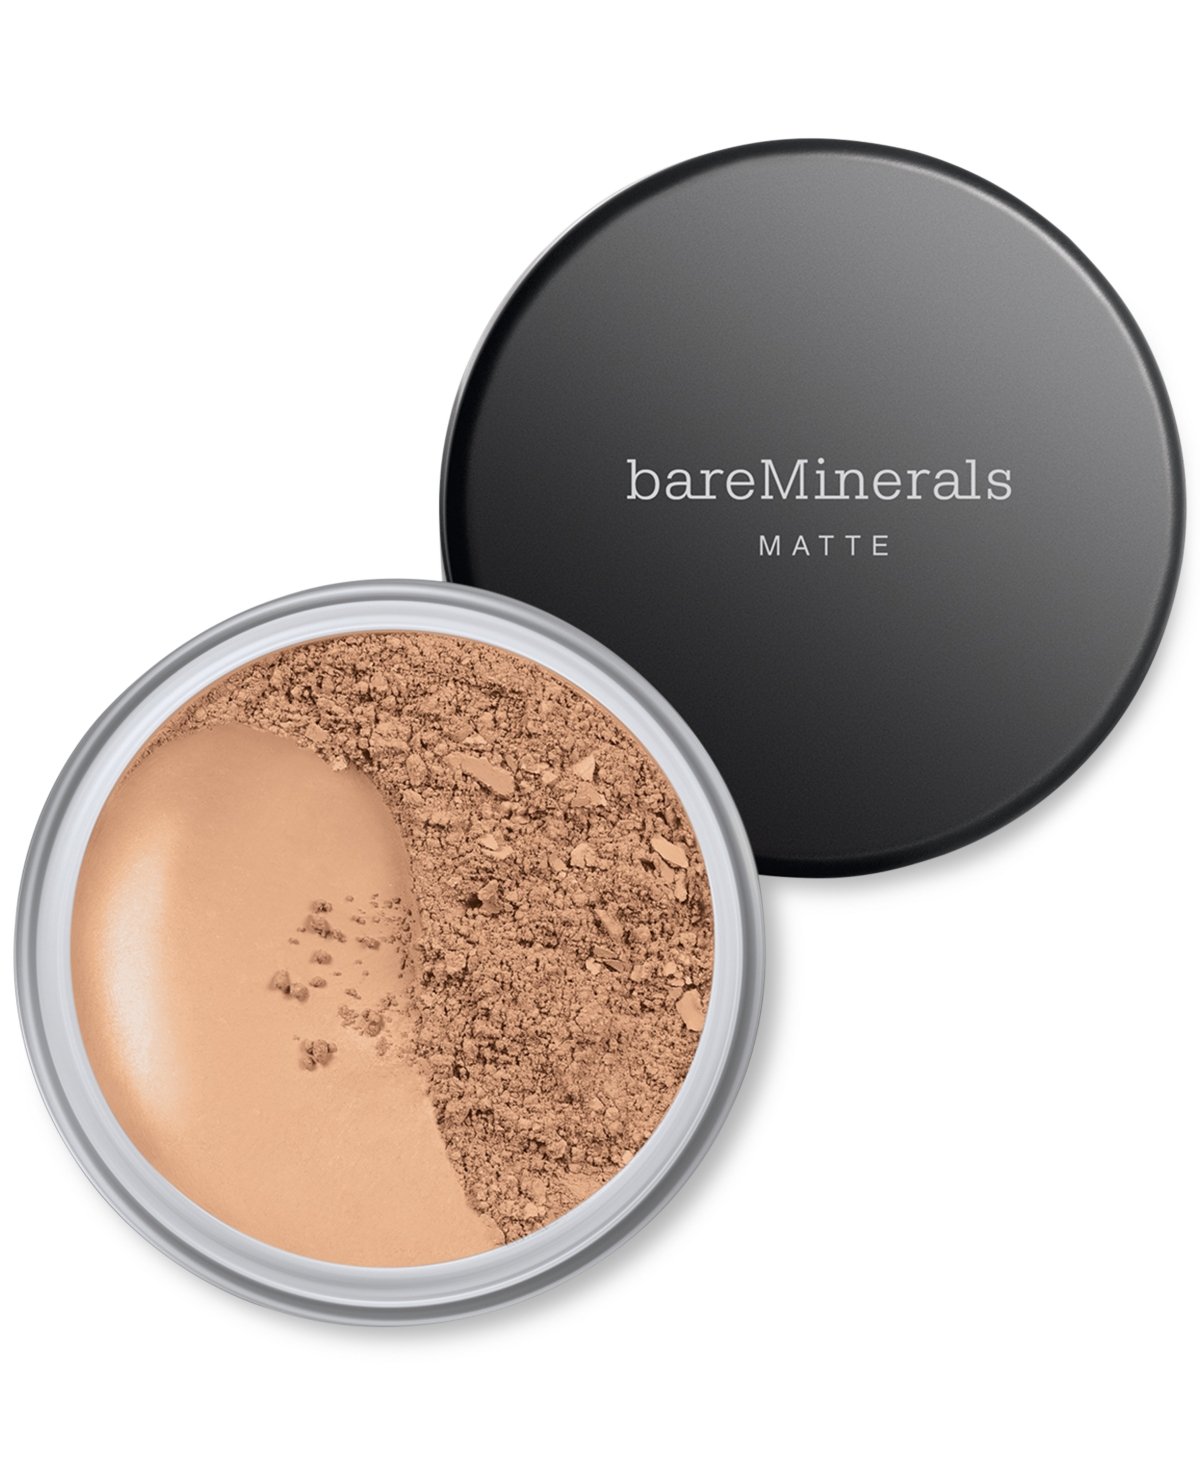 Bareminerals Matte Loose Powder Foundation Spf 15 In Medium Tan  - For Medium To Tan Skin Wit